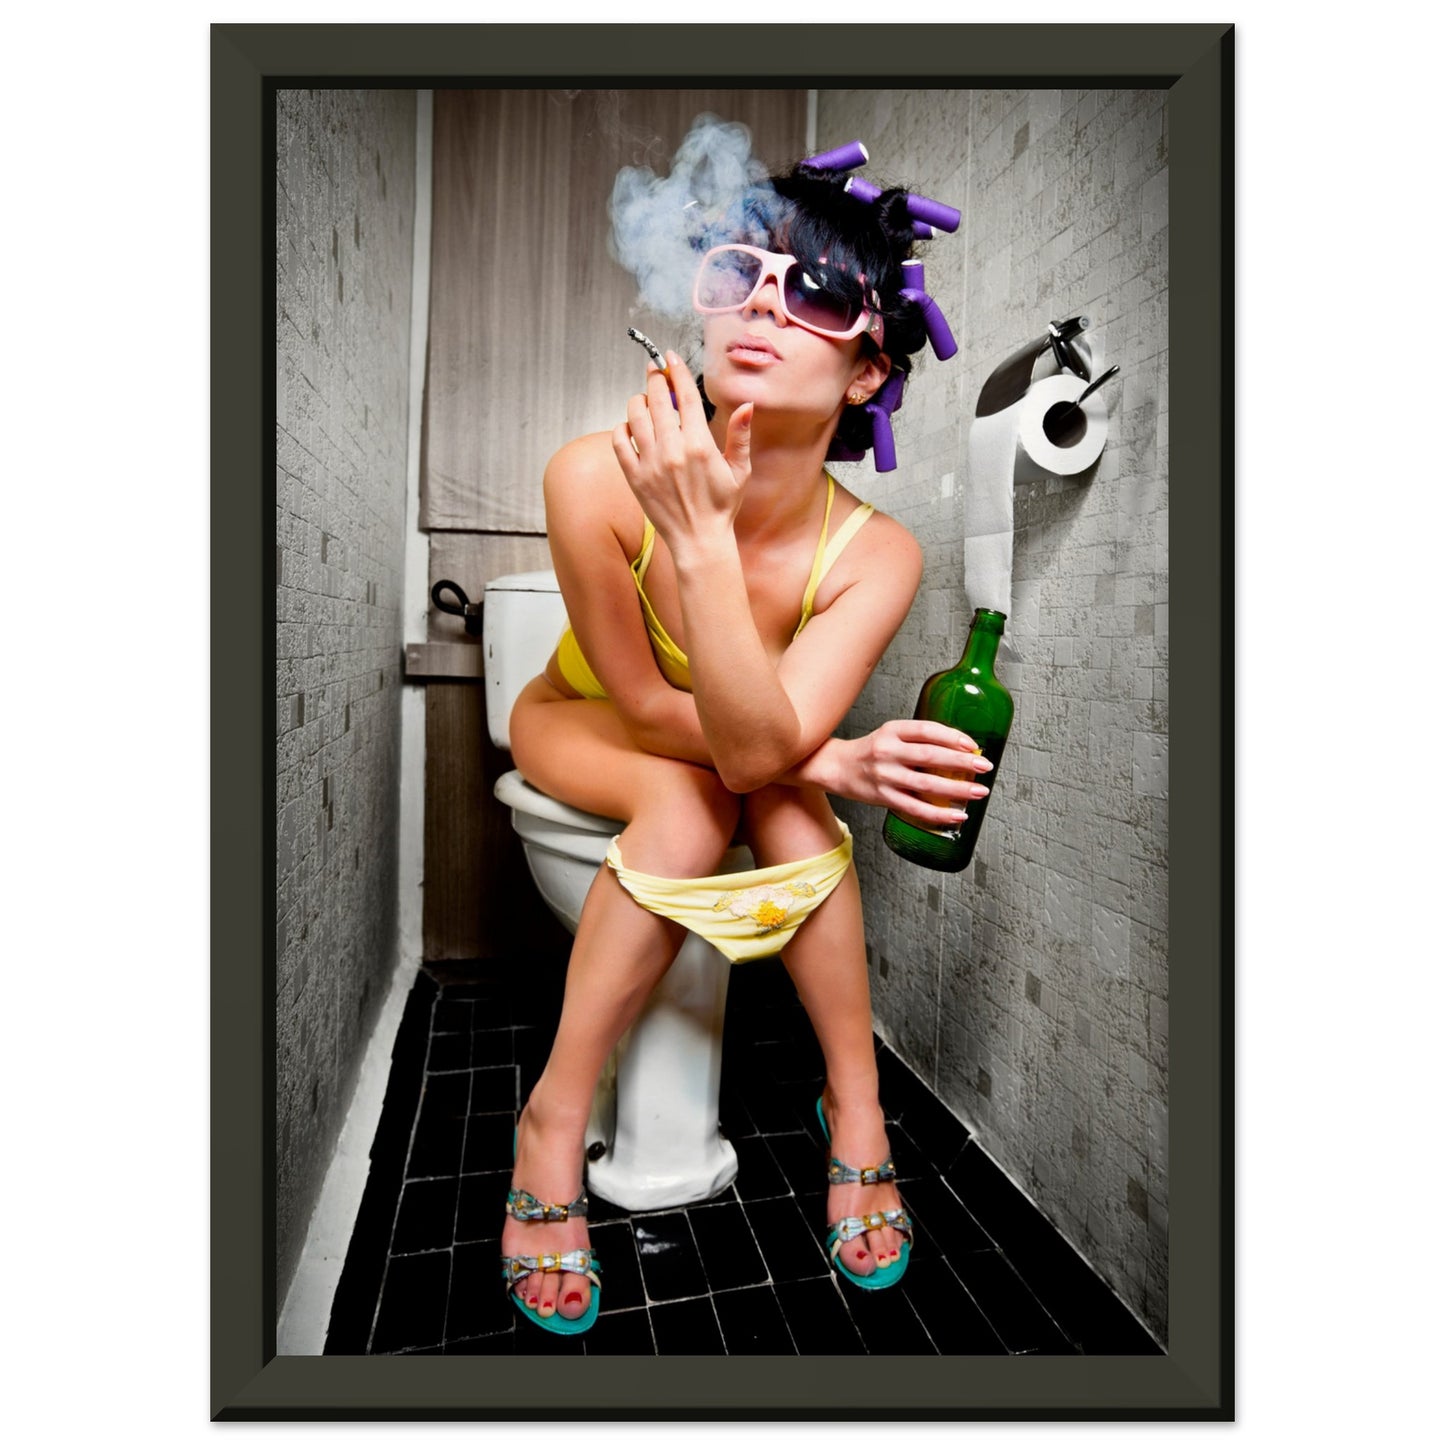 Smoking Girl on Toilet